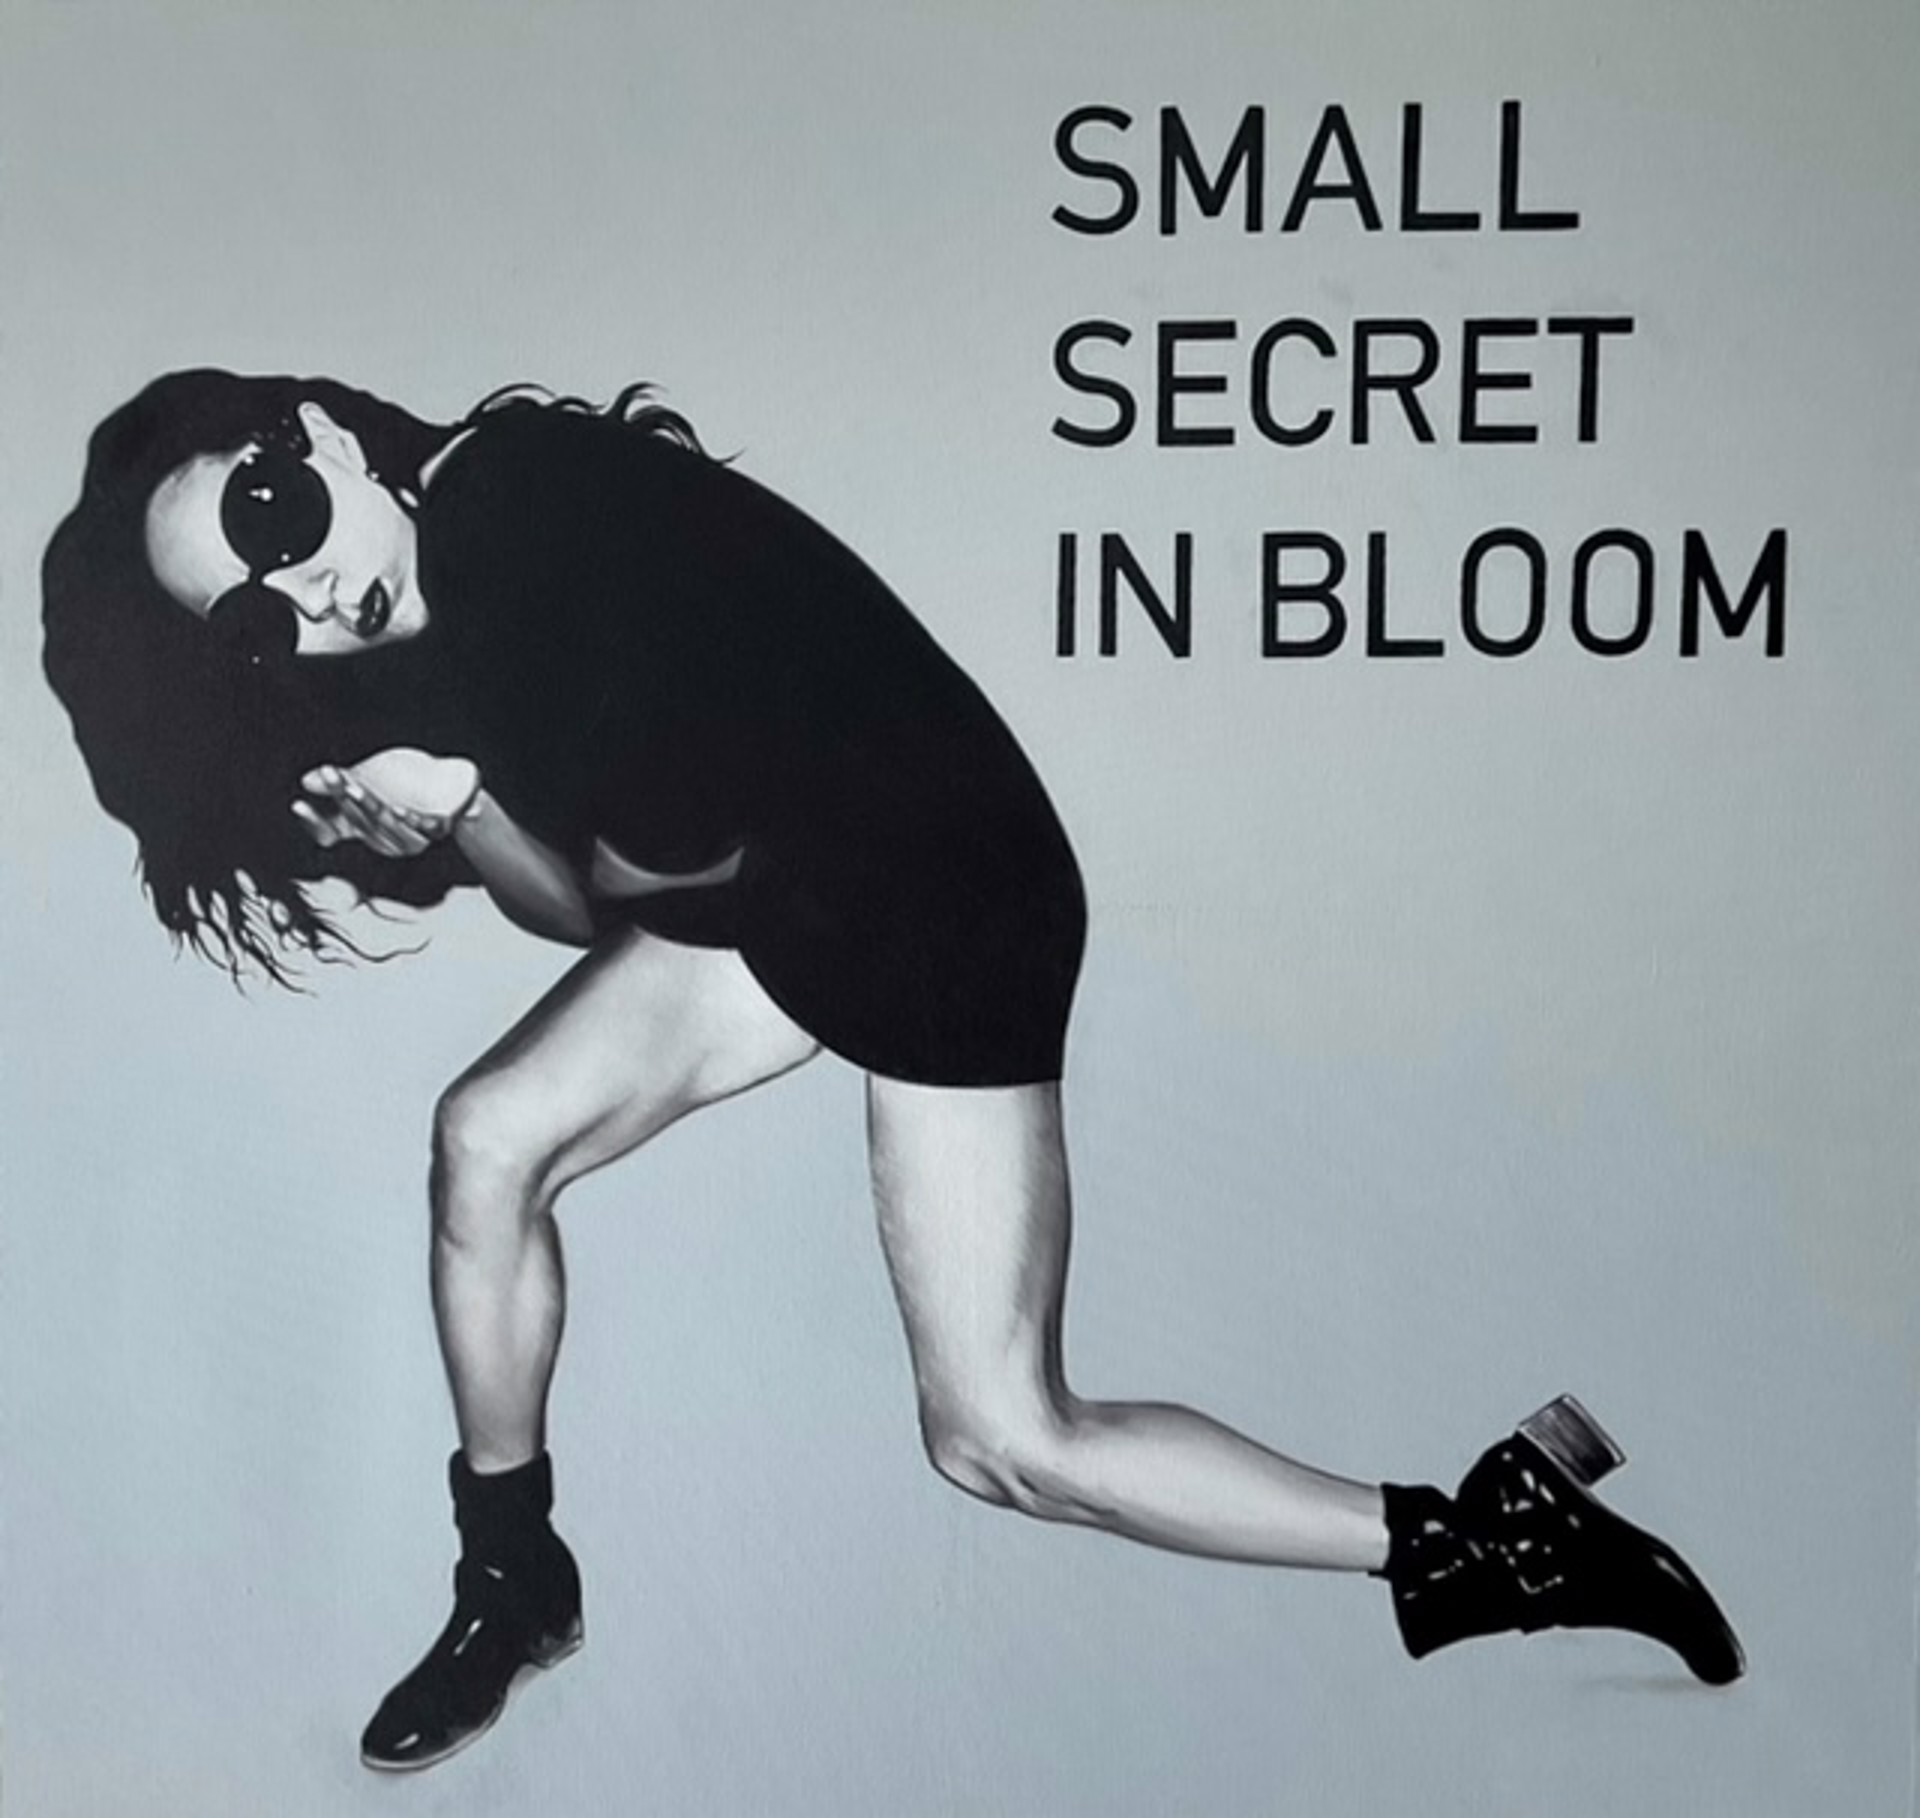 Small Secret In Bloom by Pedro Bonnin